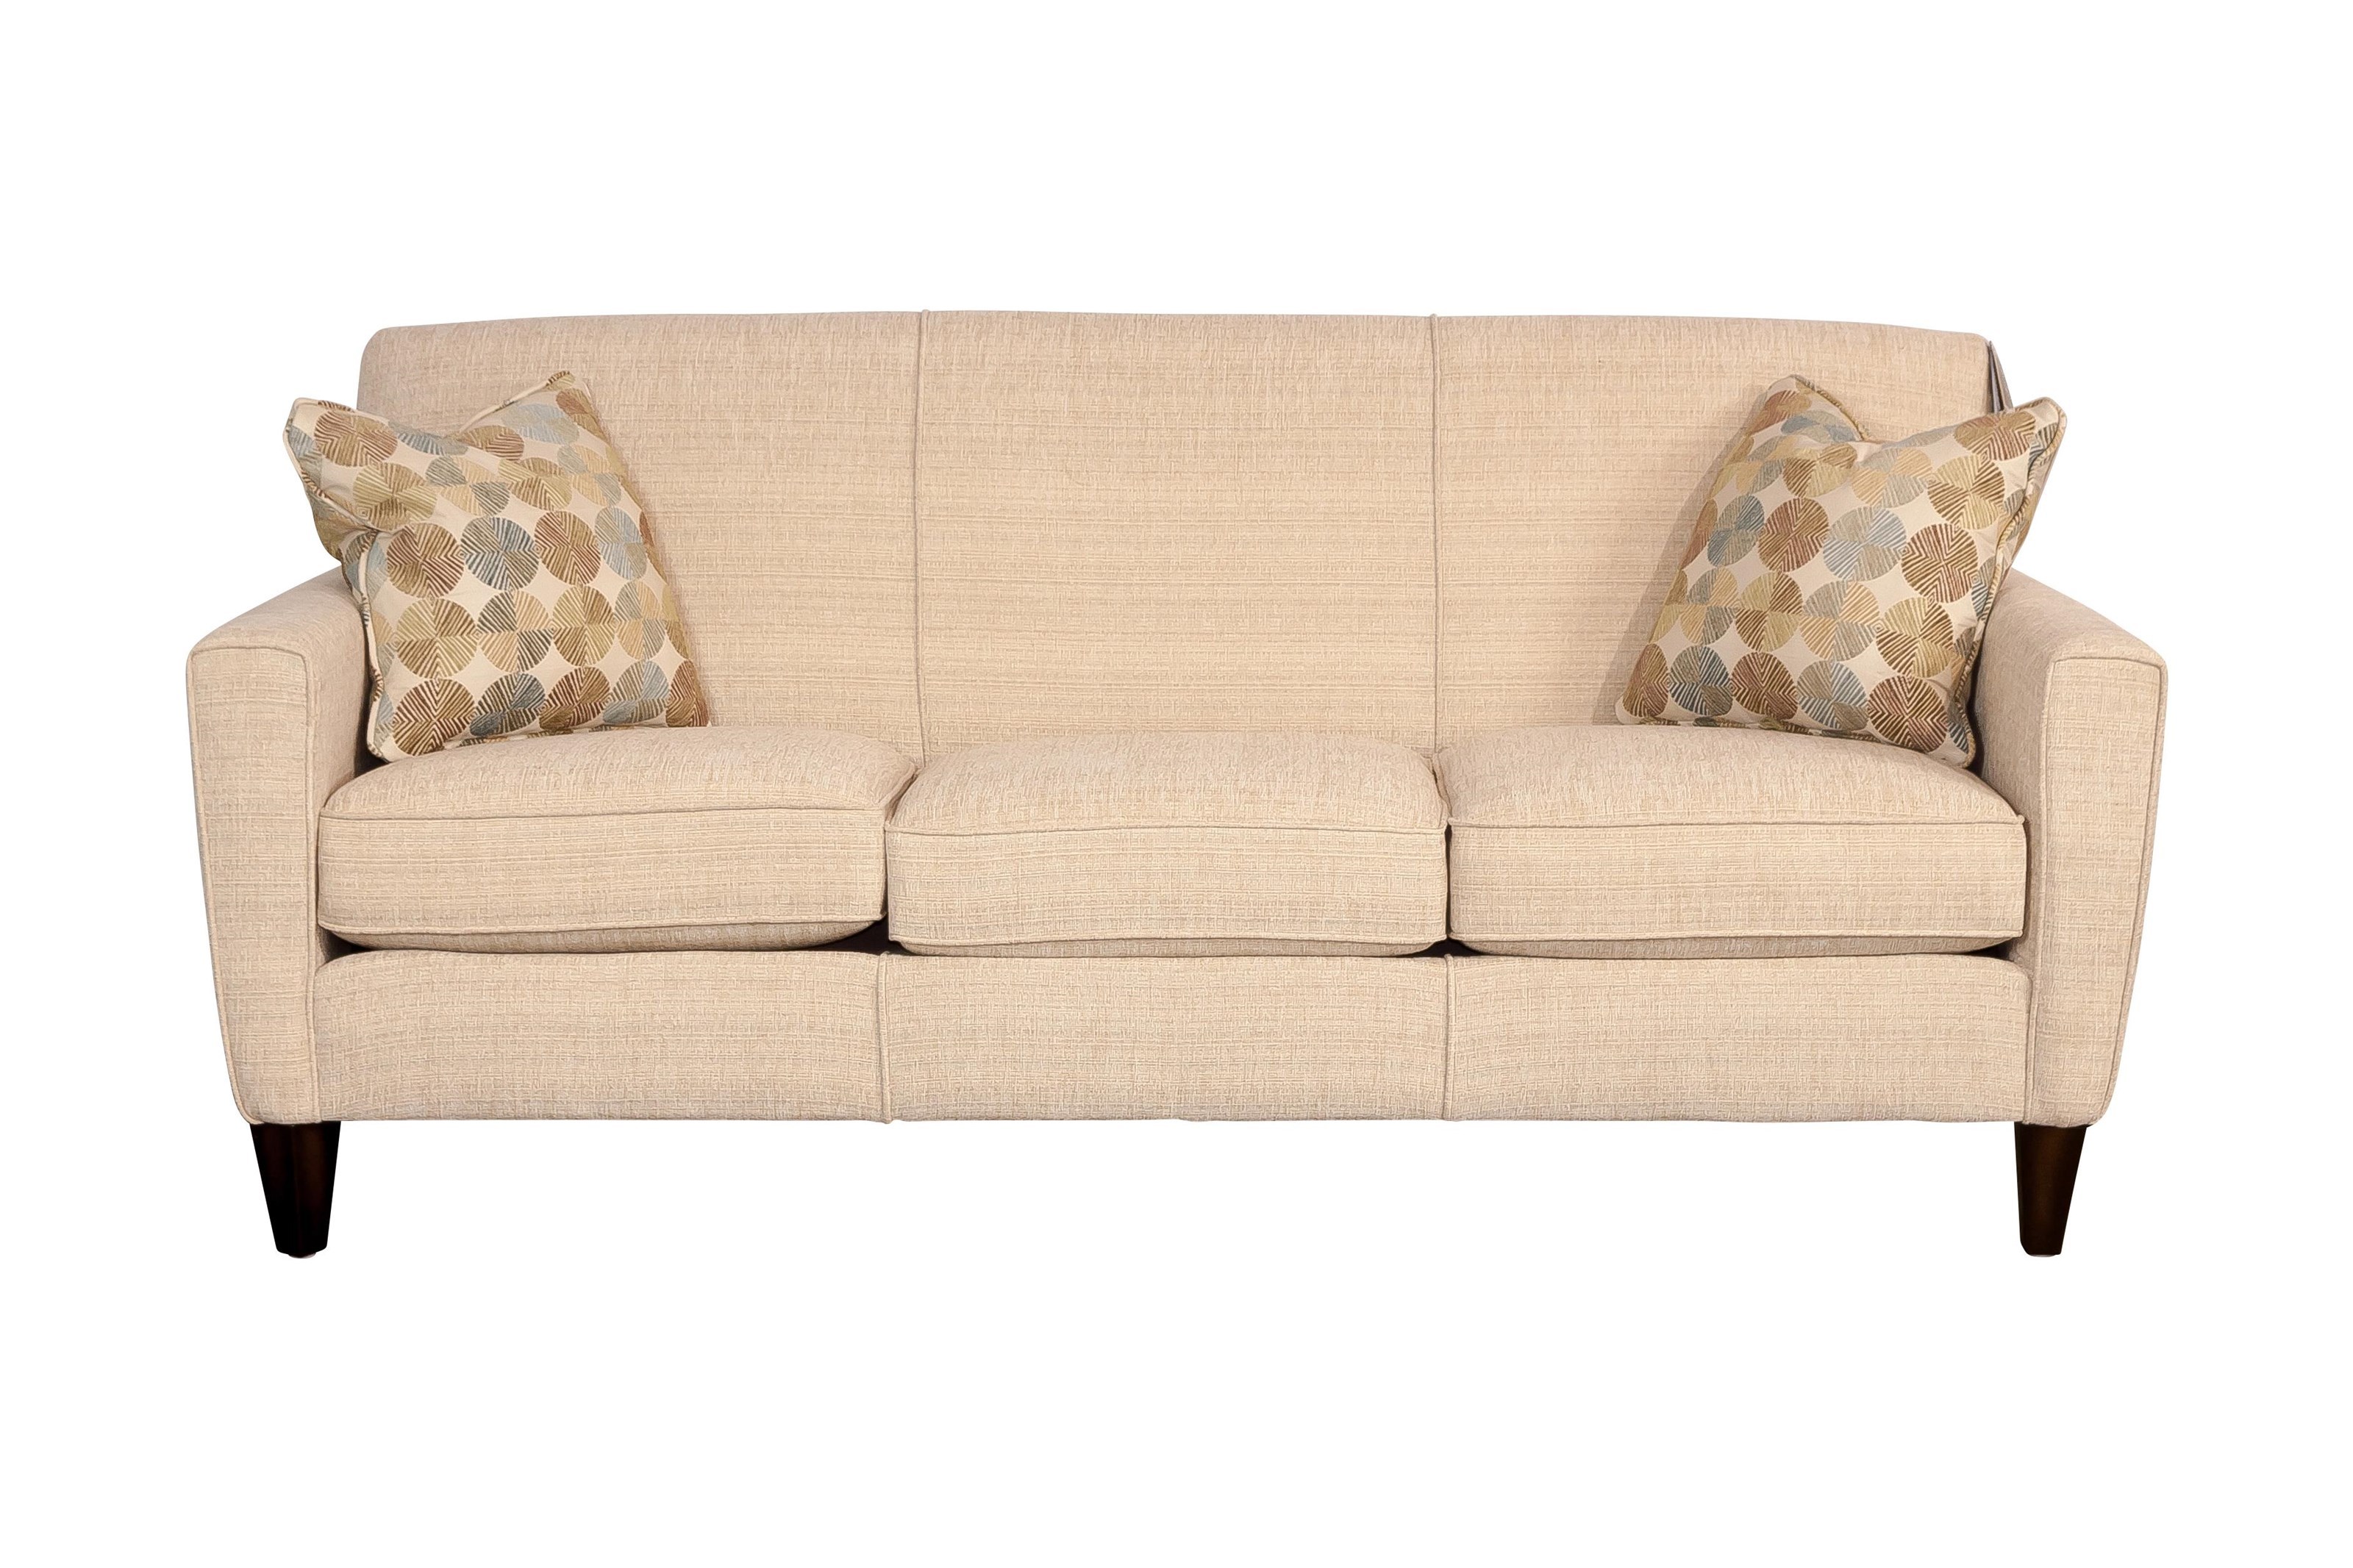 Upholstered sofa flexsteel digbyupholstered sofa ... SQNYDYI